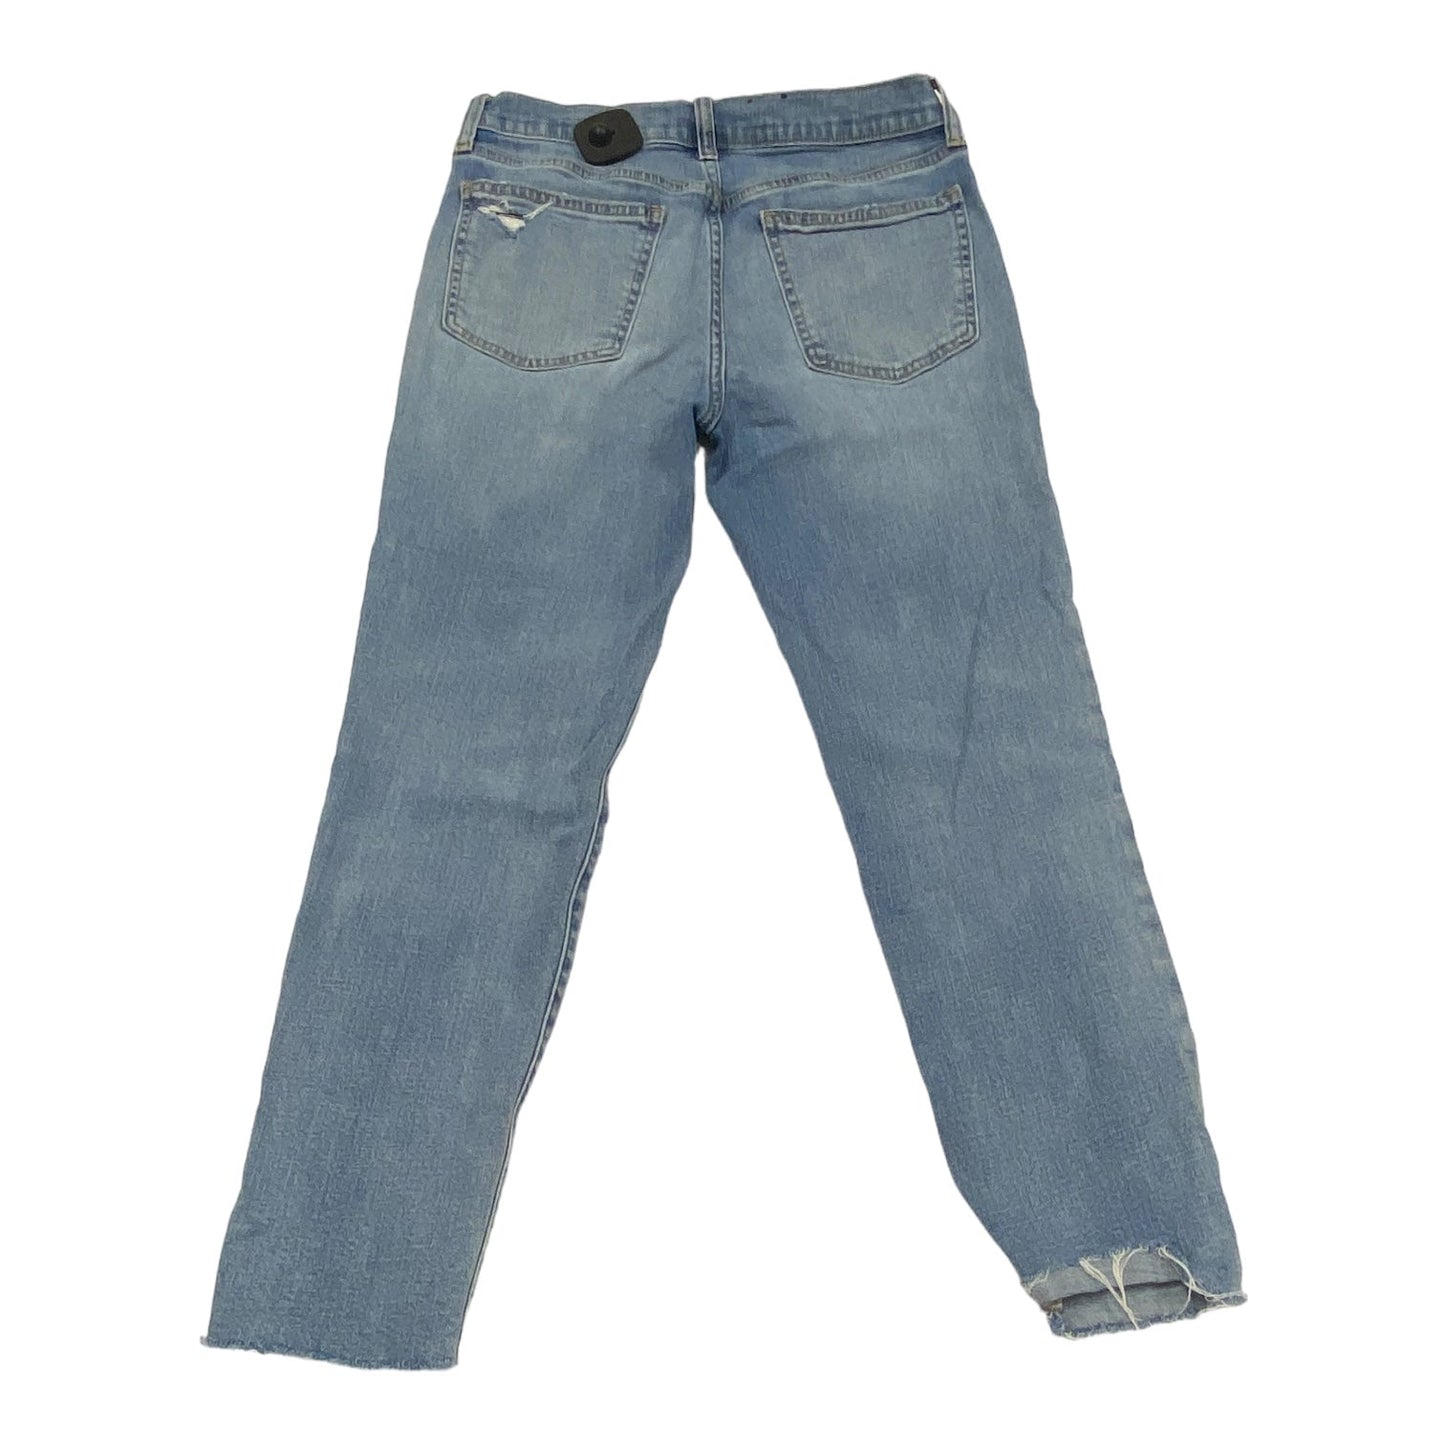 Blue Denim Jeans Cropped Gap, Size 4